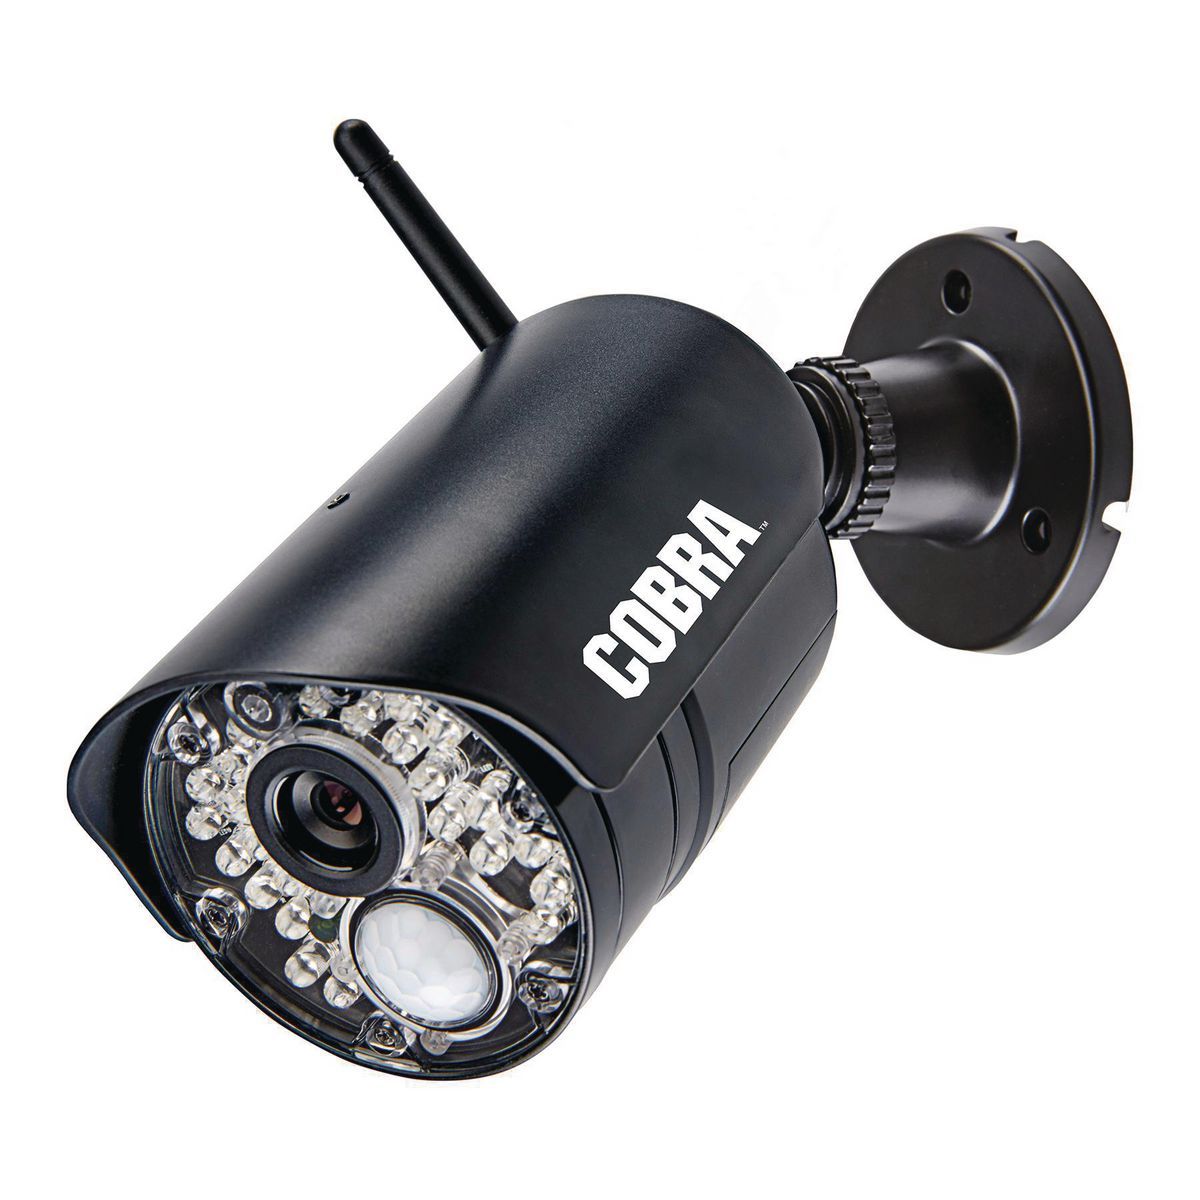 HD Indoor/Outdoor Color Wireless Surveillance Camera with Night Vision